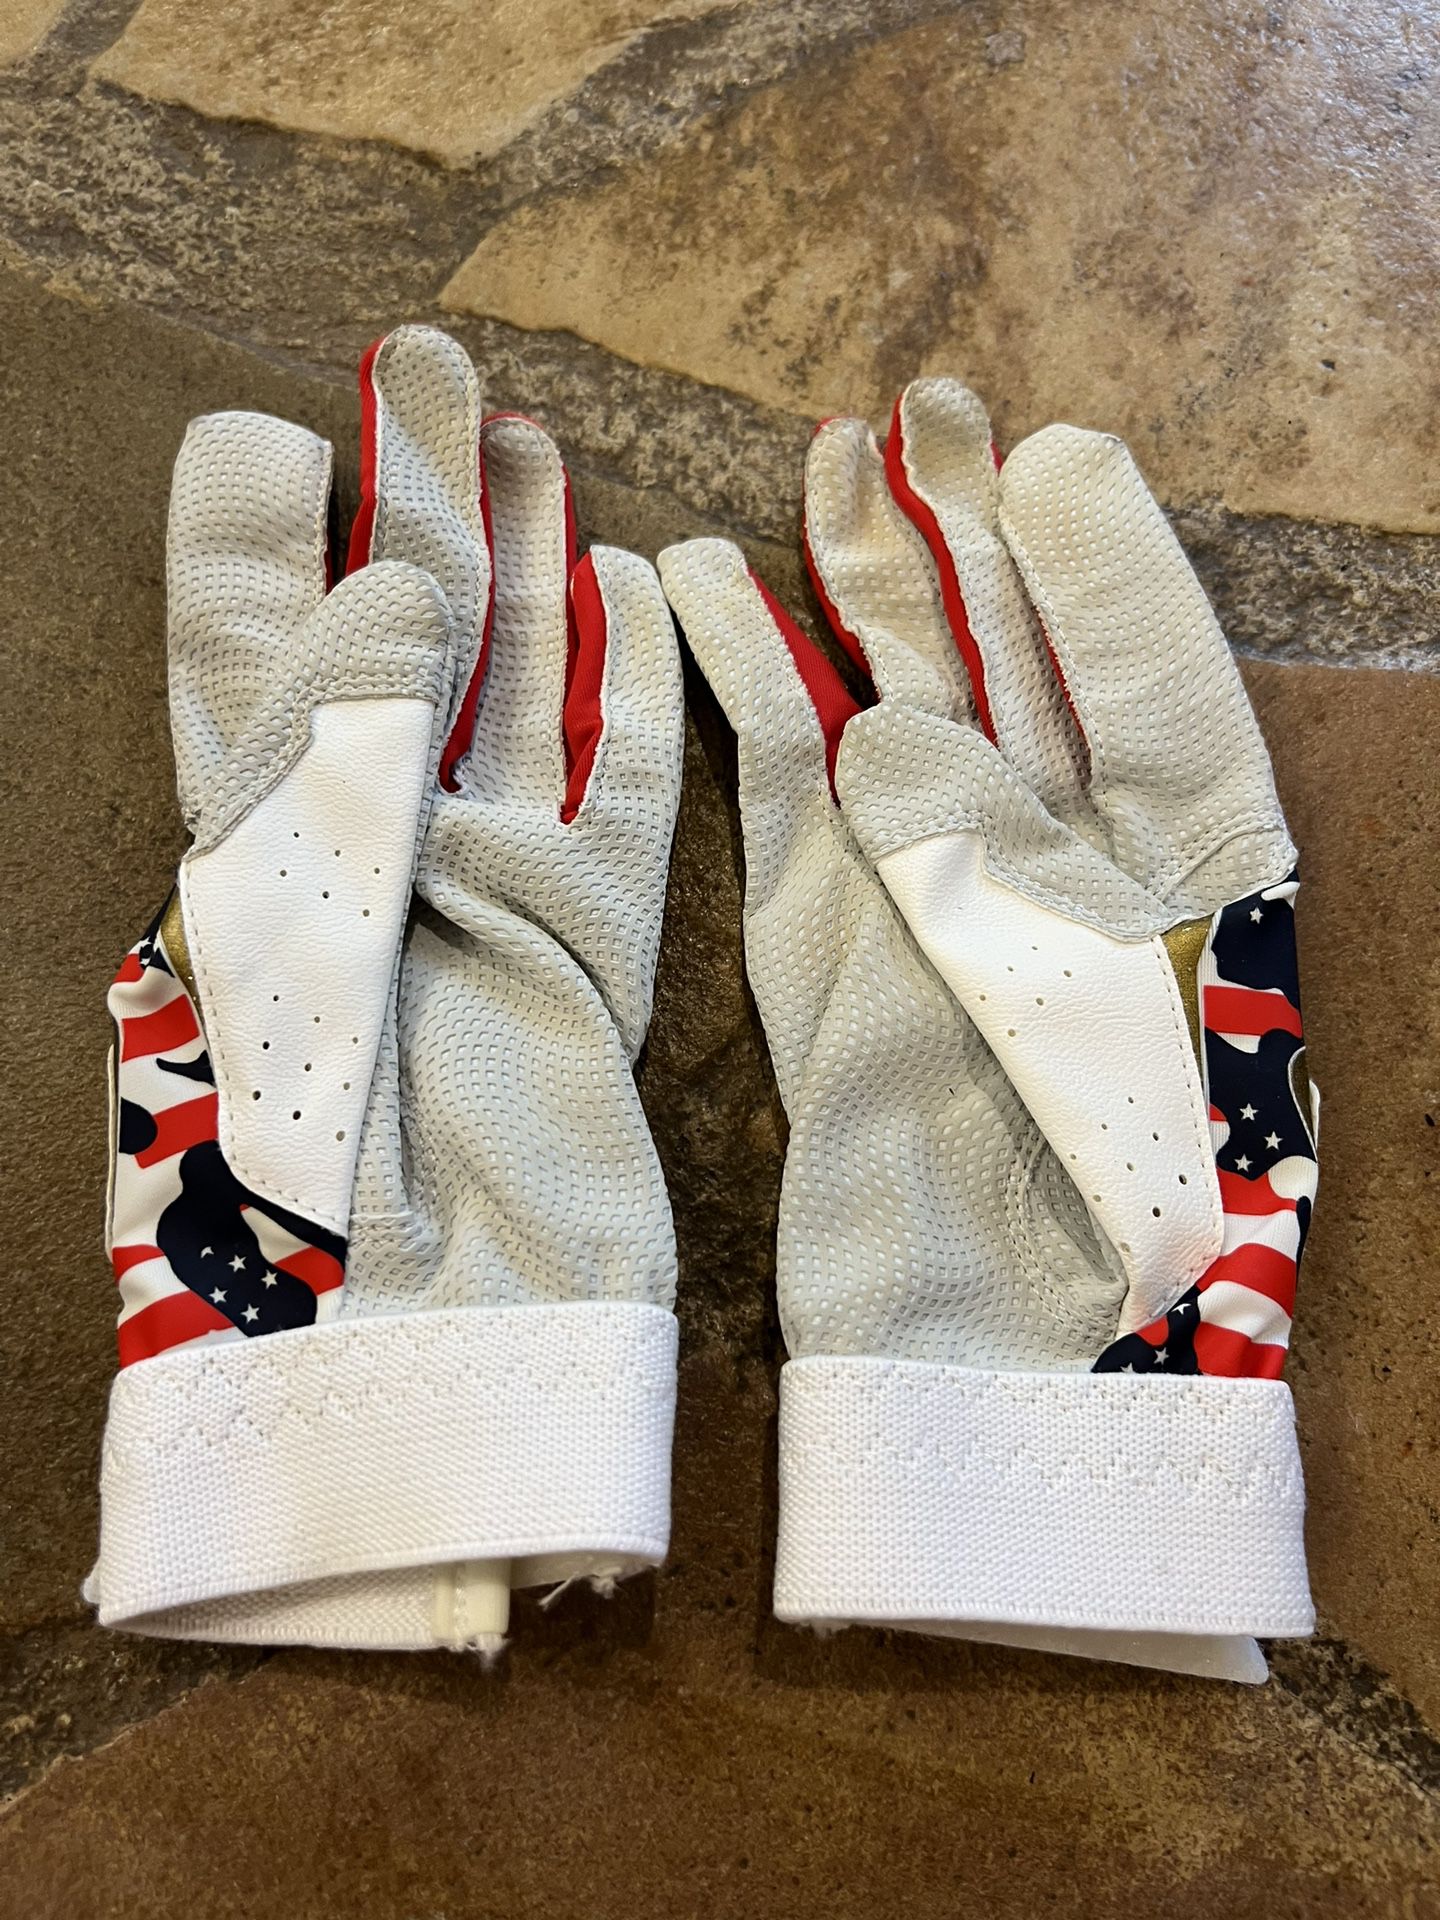 Under Armor YSM Batting gloves for Sale in Las Vegas, NV - OfferUp